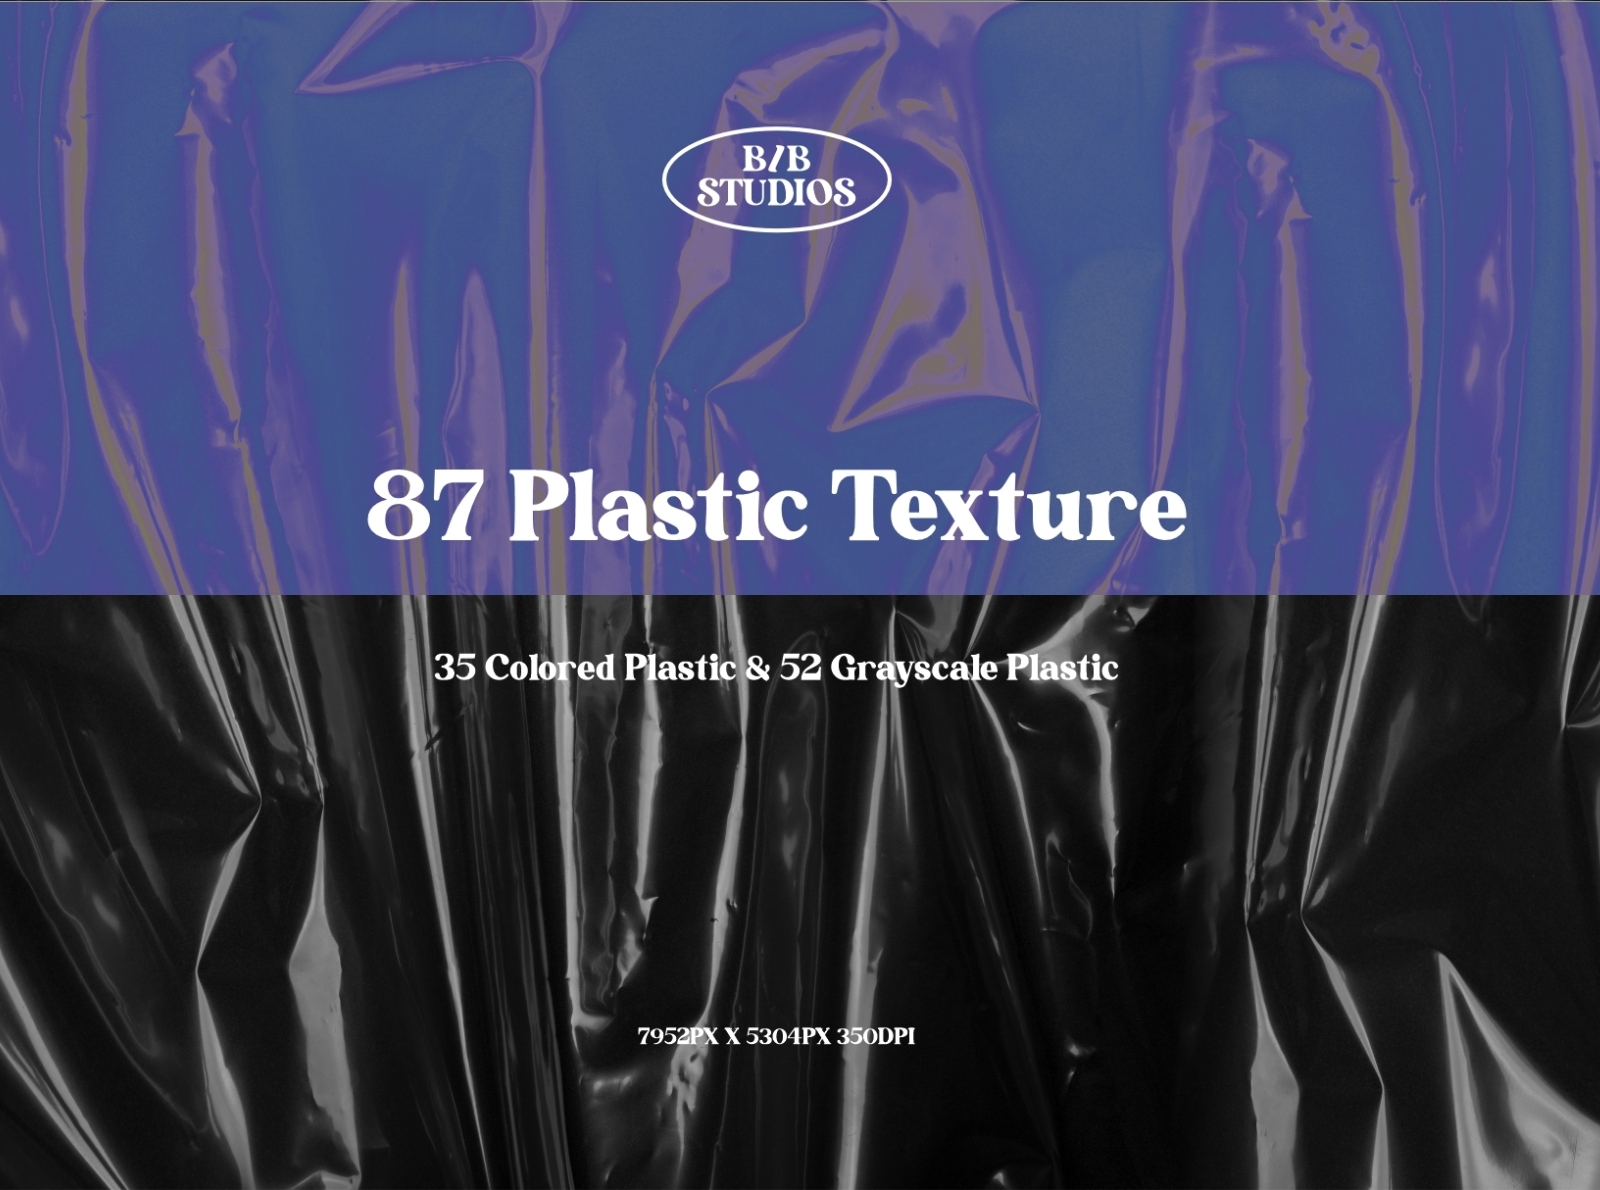 87 Plastic Texture Background by B/B Studio on Dribbble